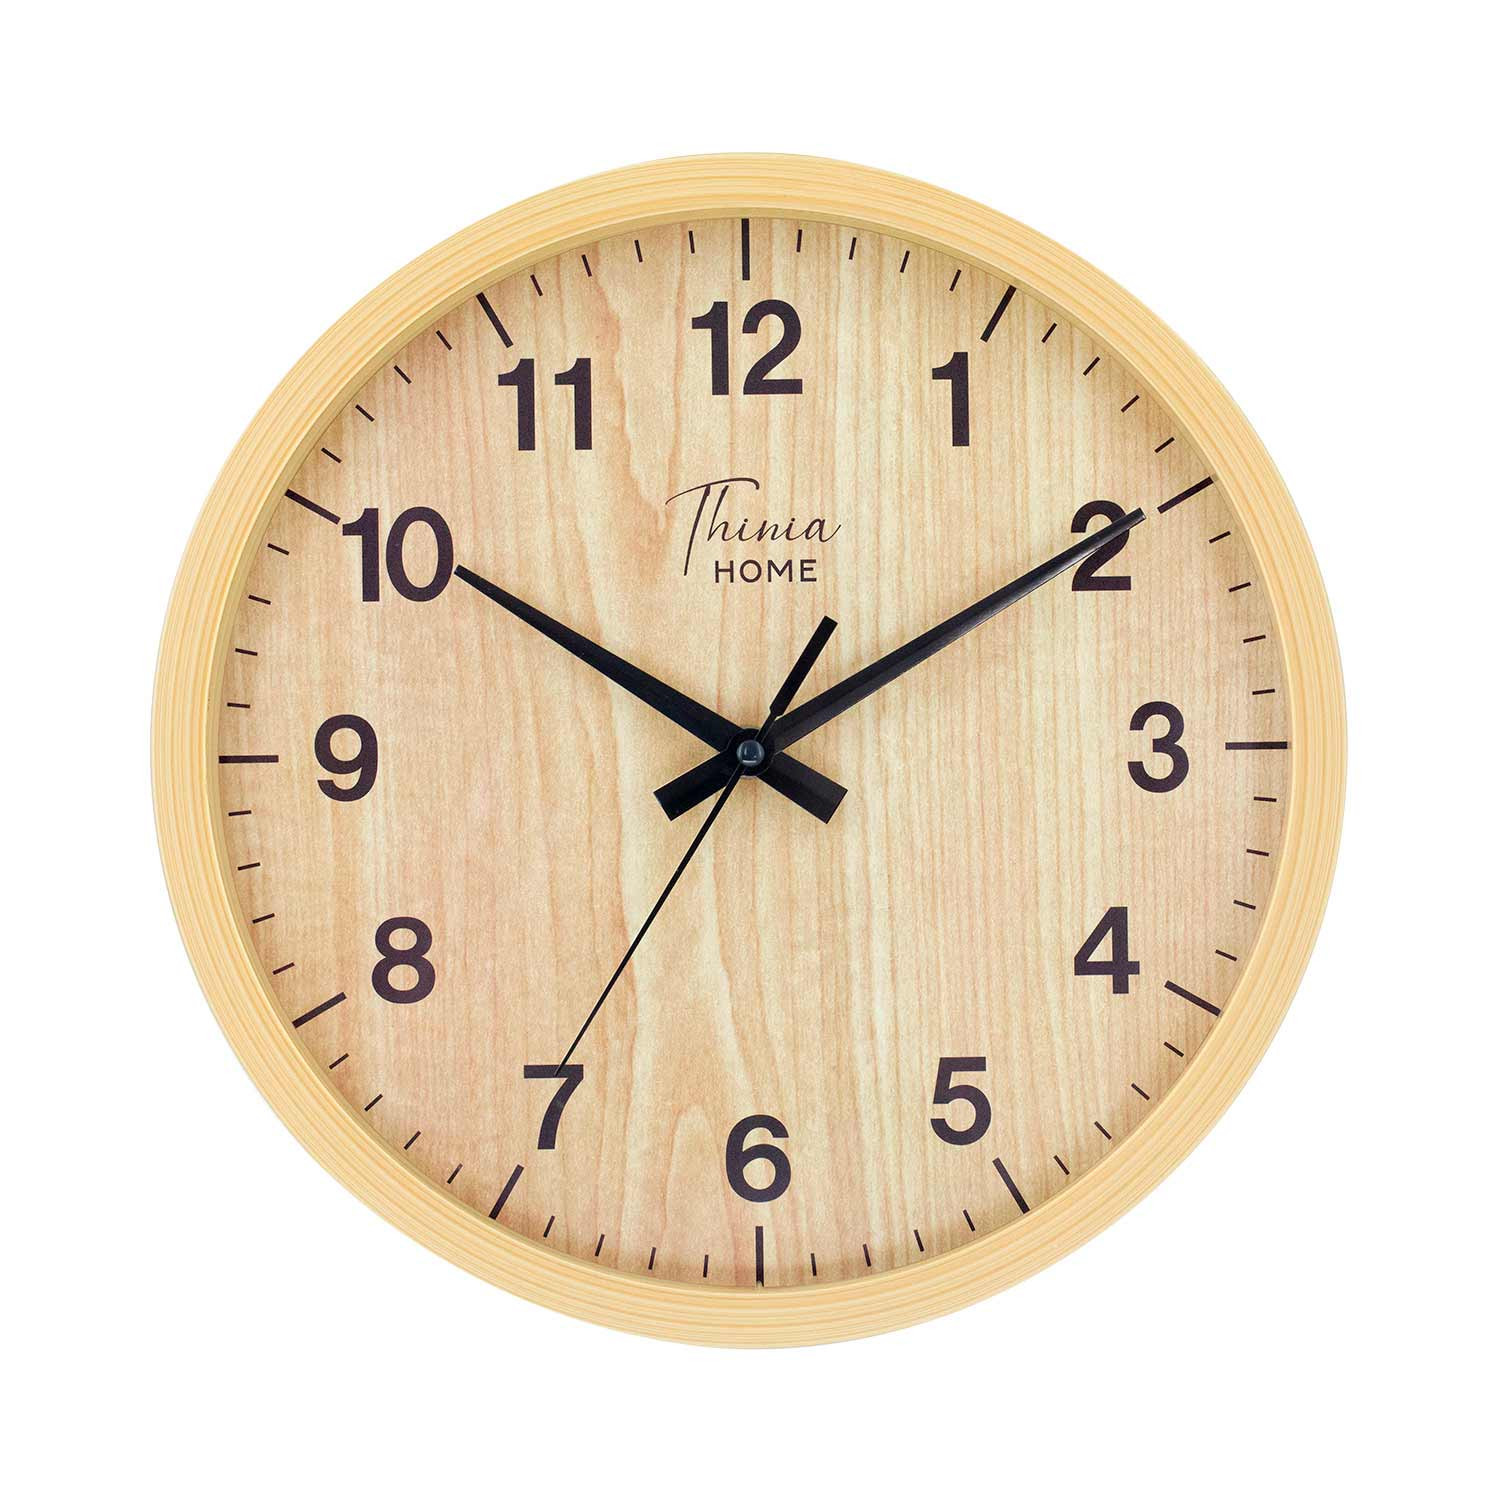 Reloj de Pared - RelojPared-81029 THINIA HOME, Madera Natural